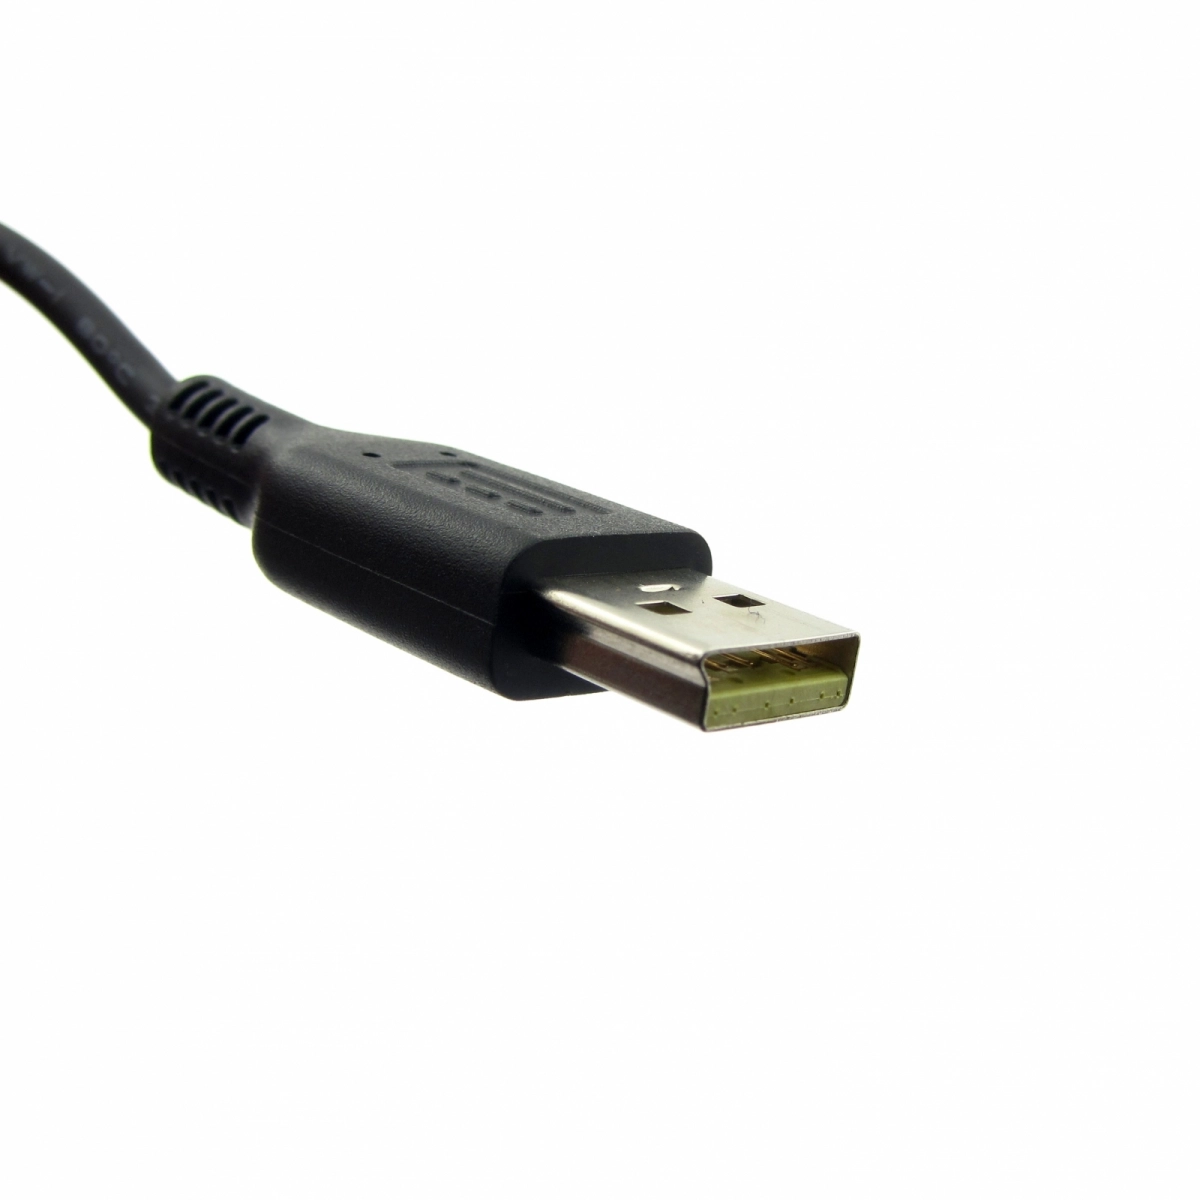 MTXtec Netzteil für LENOVO ADL40WDE, 20/5.2V, 2A, Stecker USB